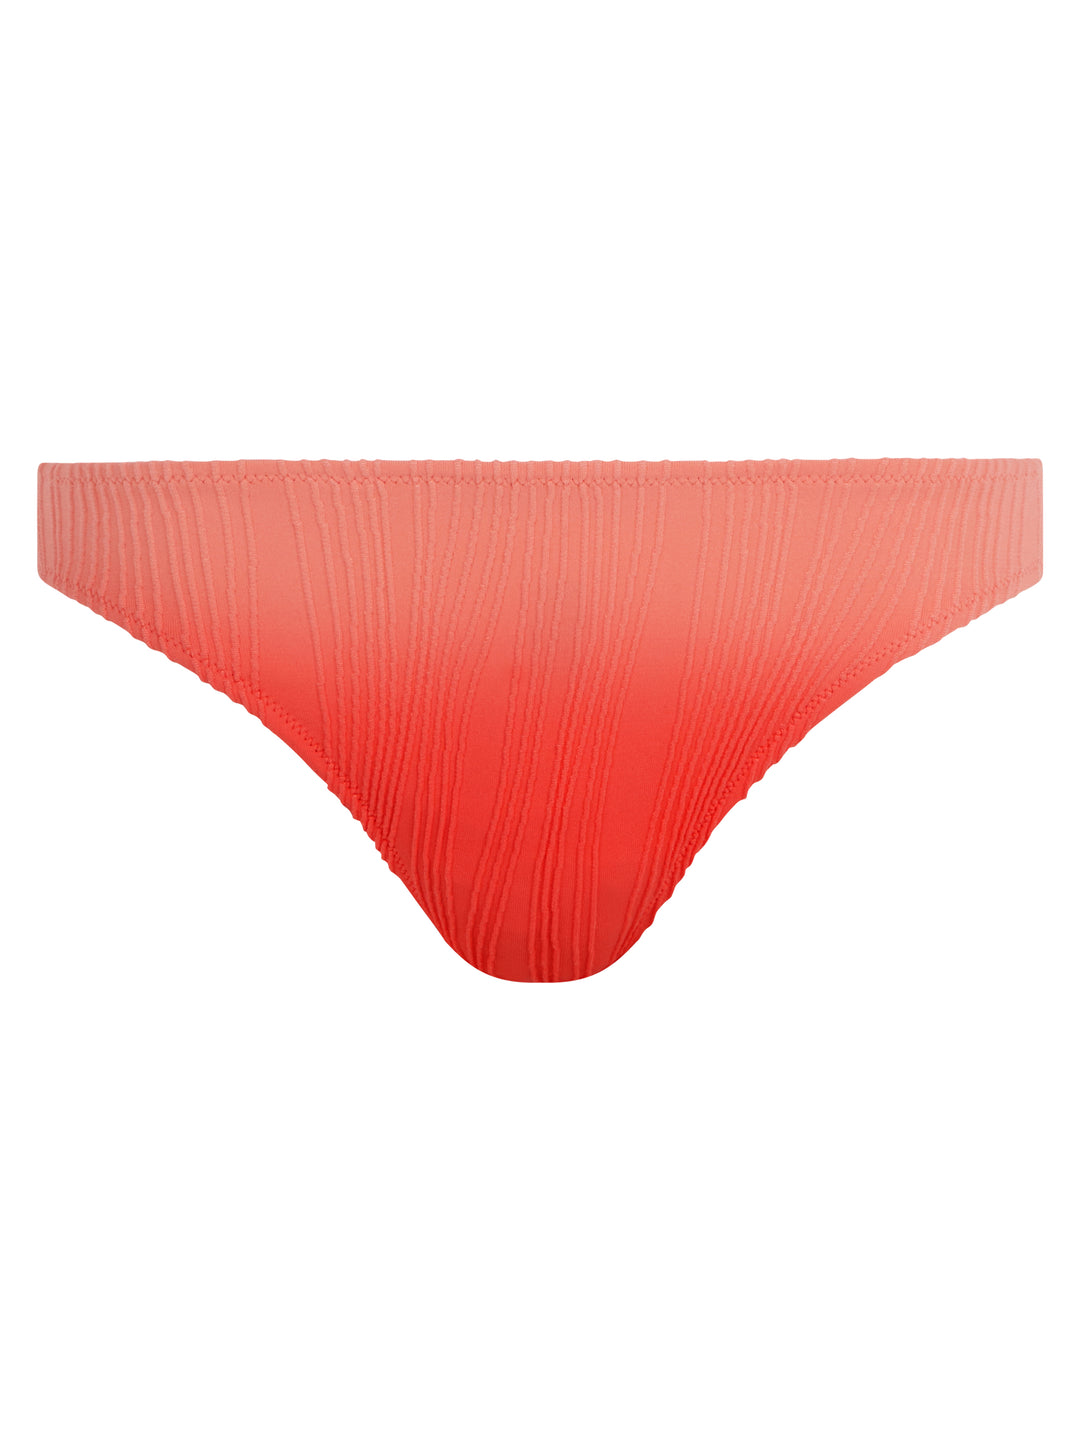 Chantelle Swimwear - Swim One Size Brief Orange tie & dye